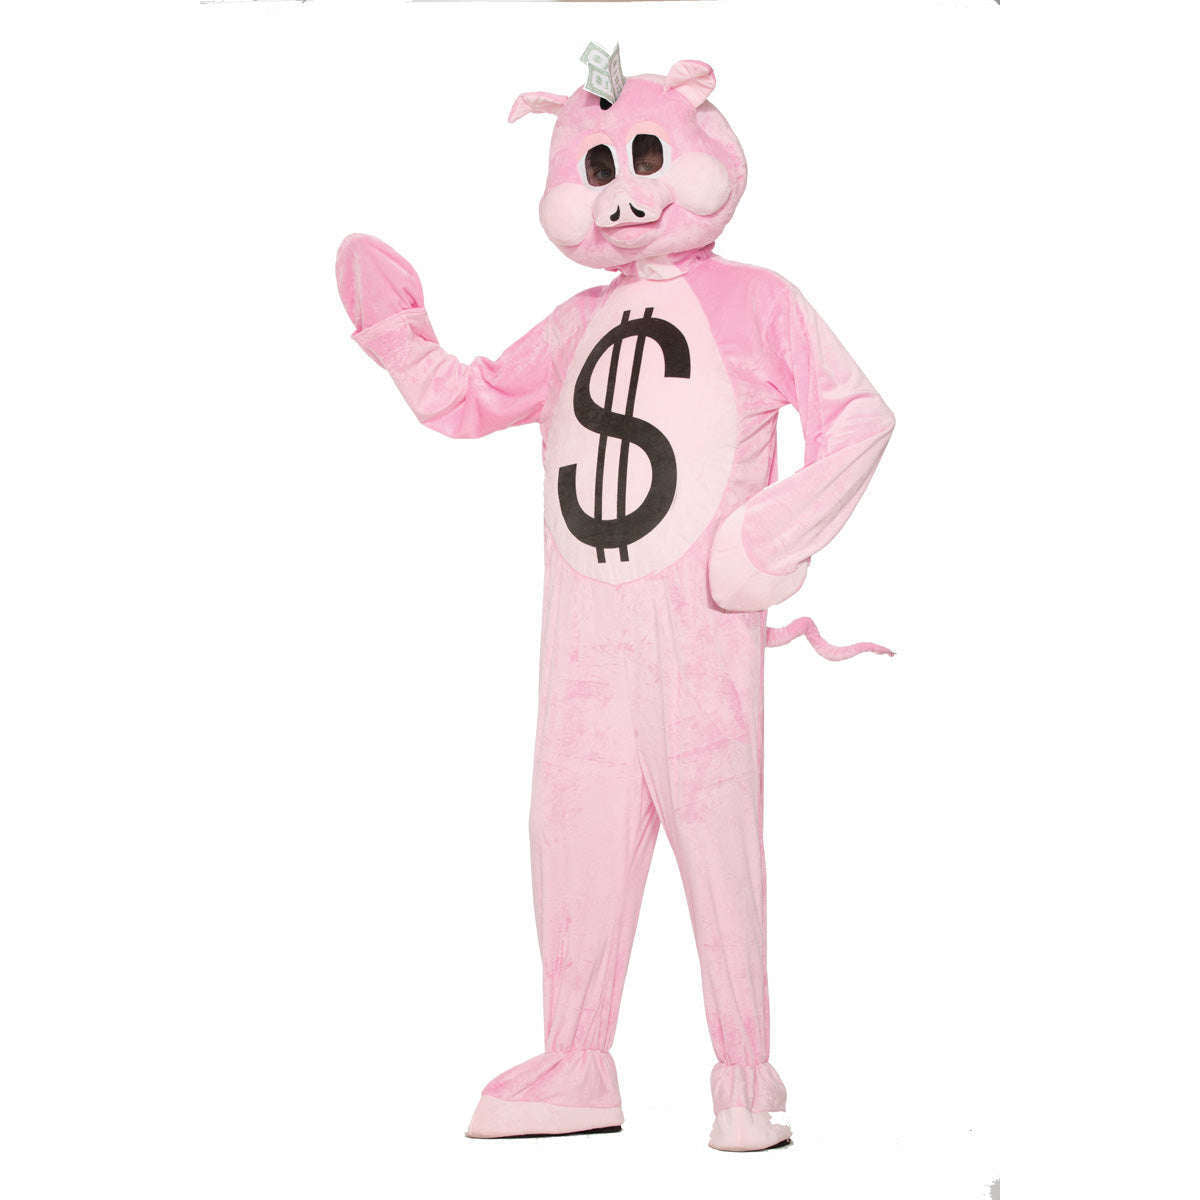 Overstuffed Piggy Bank Adult Mascot Costume